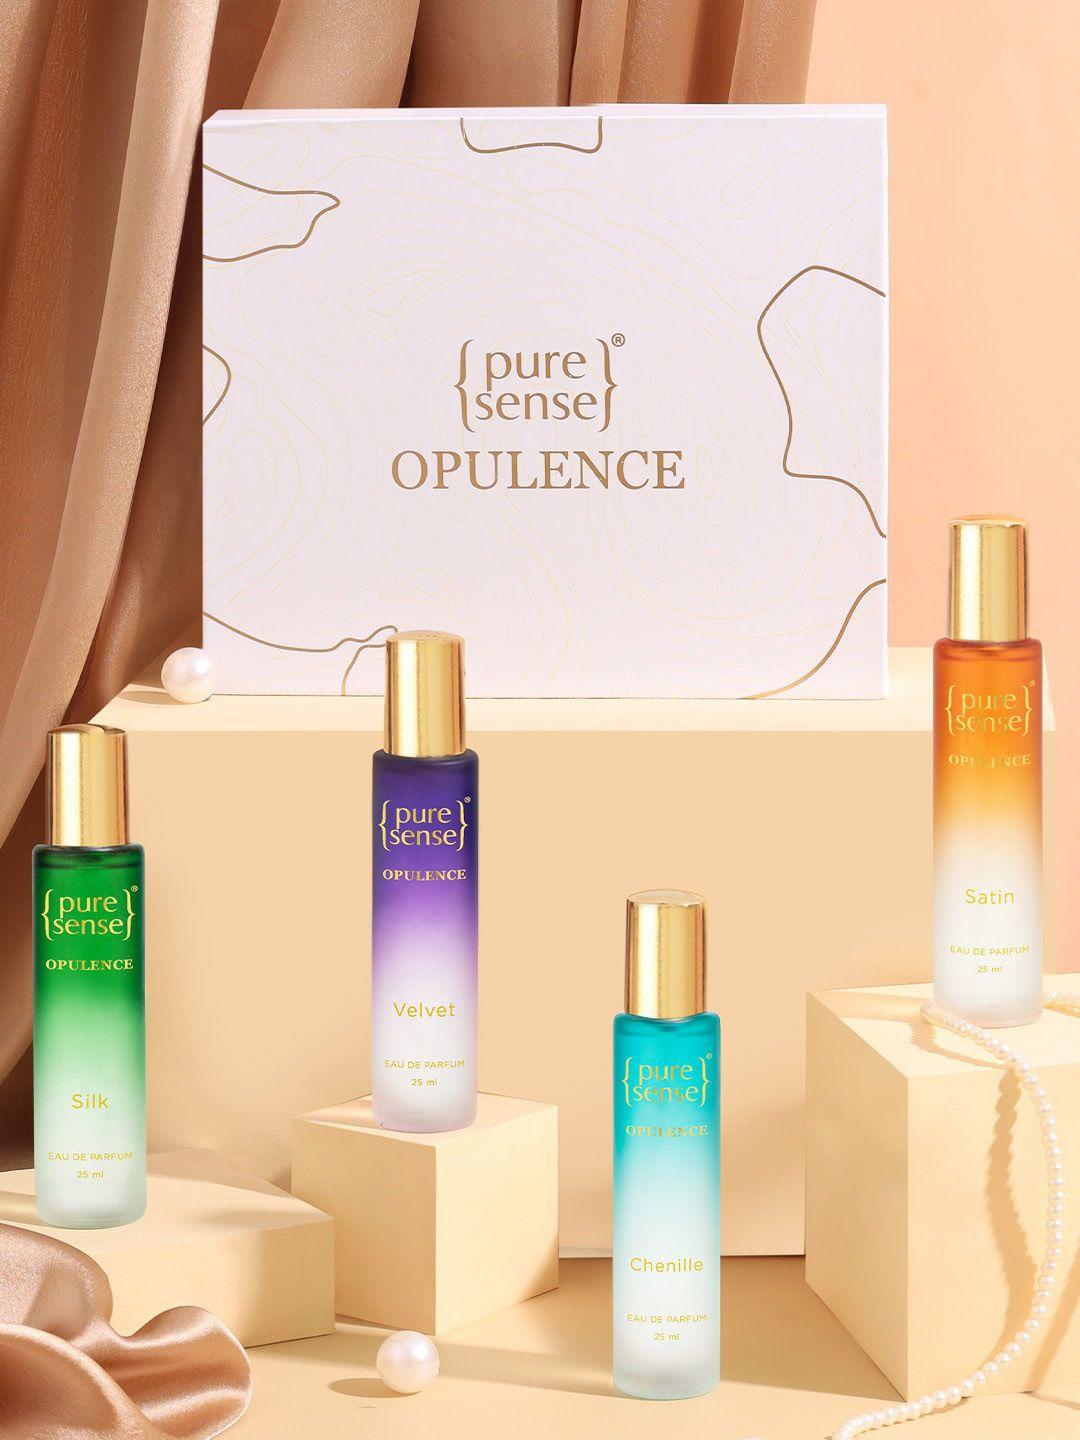 pure sense opulence set of 4 silk-velvet-satin-chenille eau de parfum - 25ml each